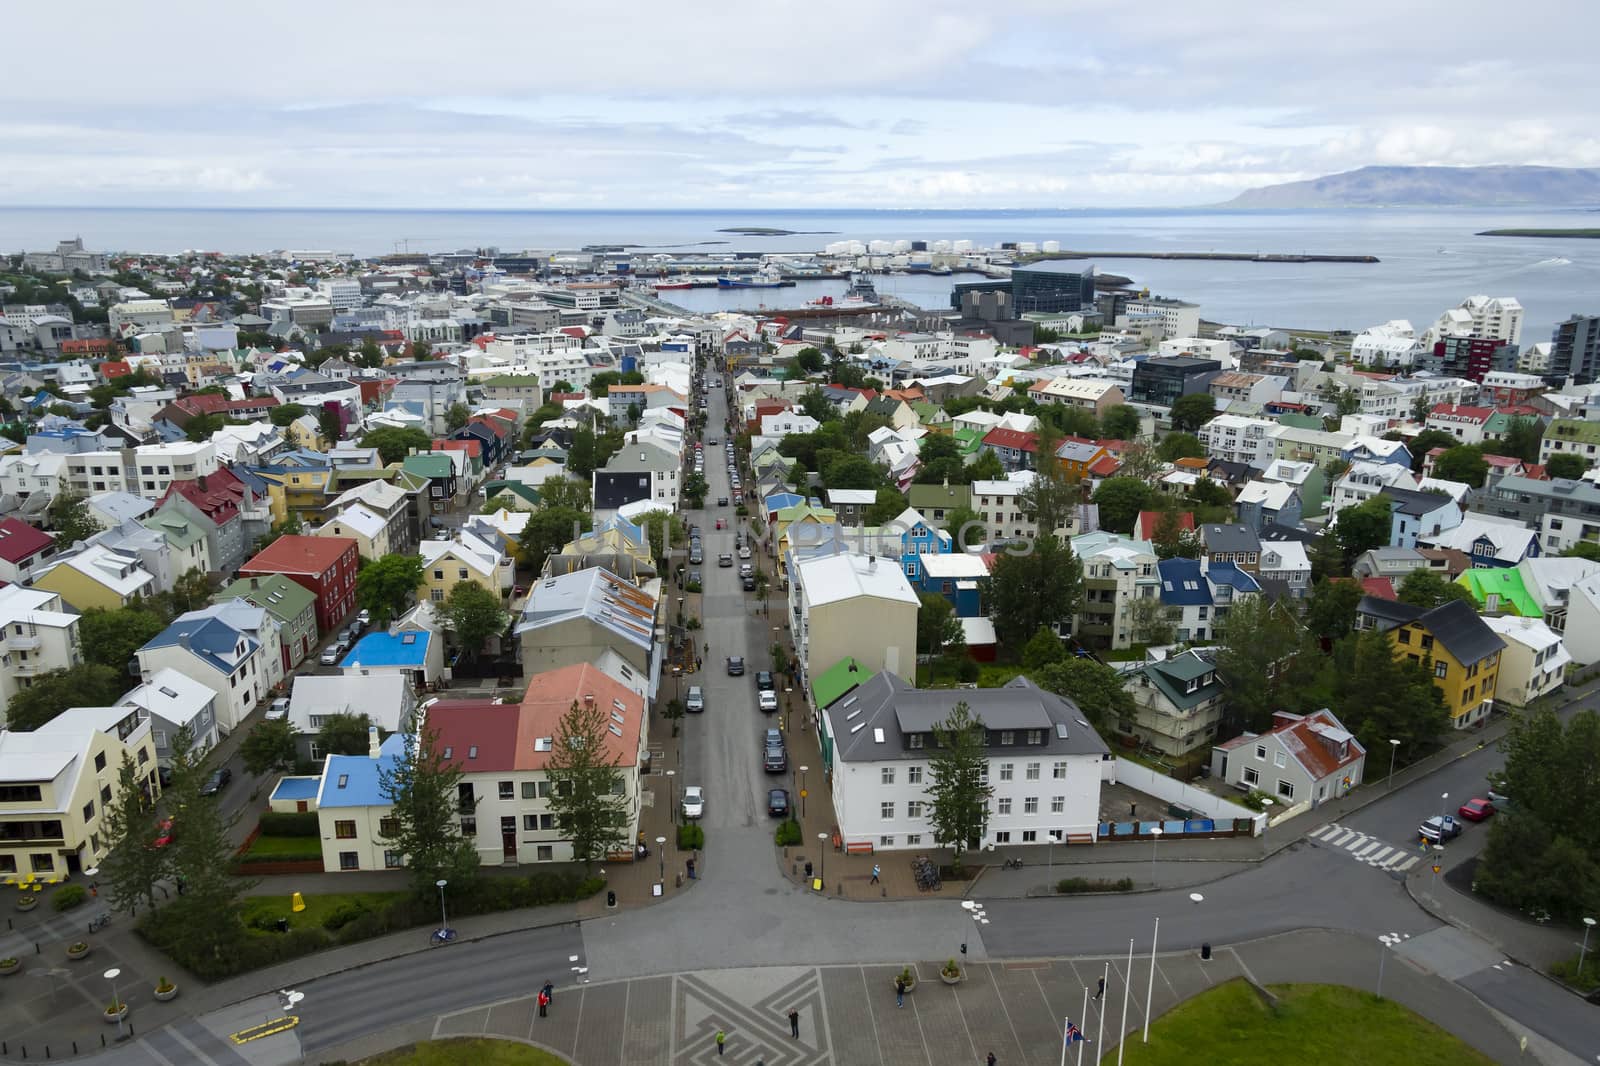 Downtown Reykjavik, Iceland by Tetyana